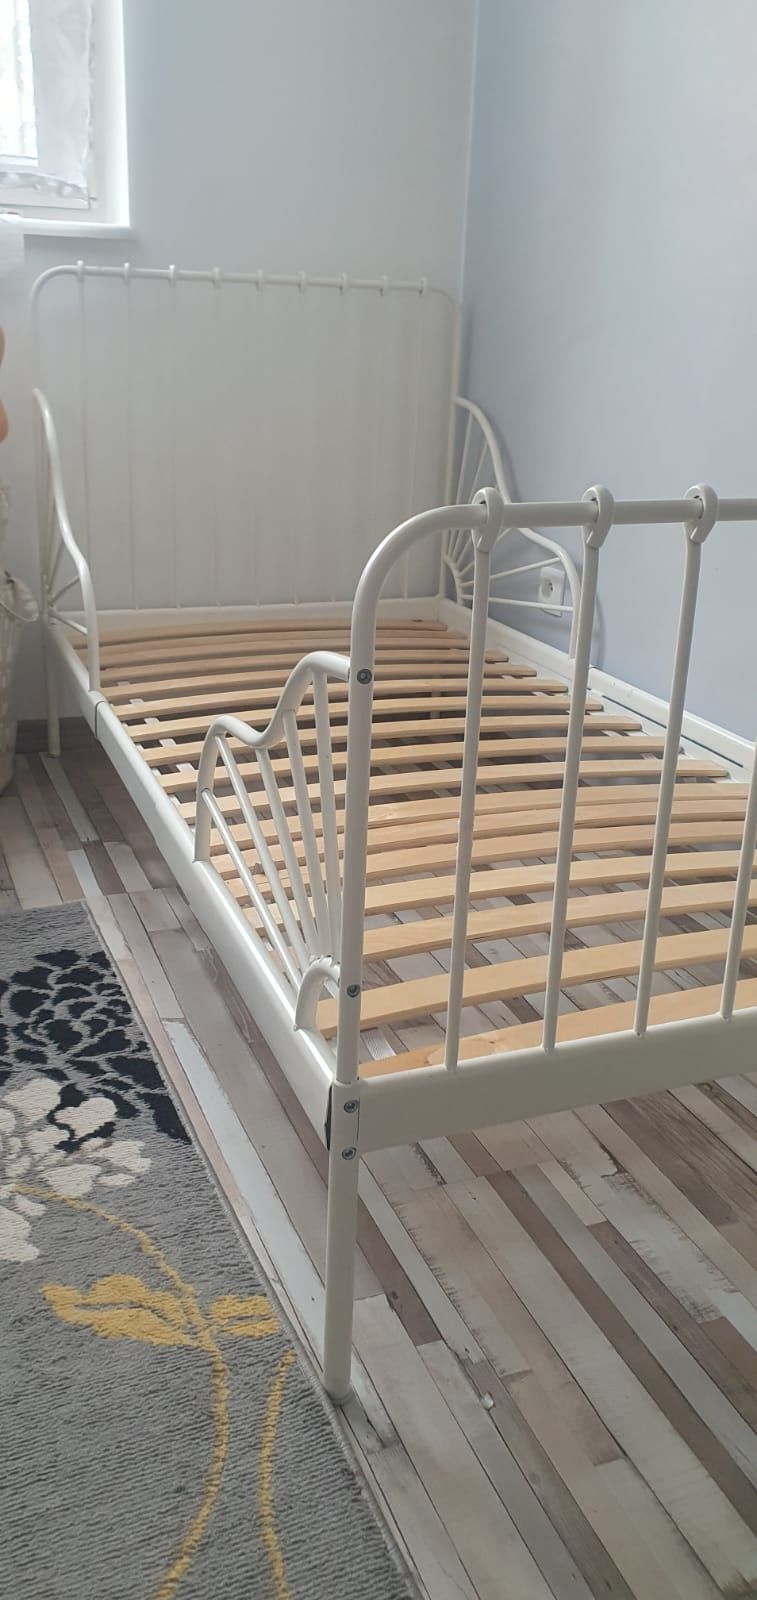 Ikea łóżko regulowane rosnące 200 cm x 80 cm